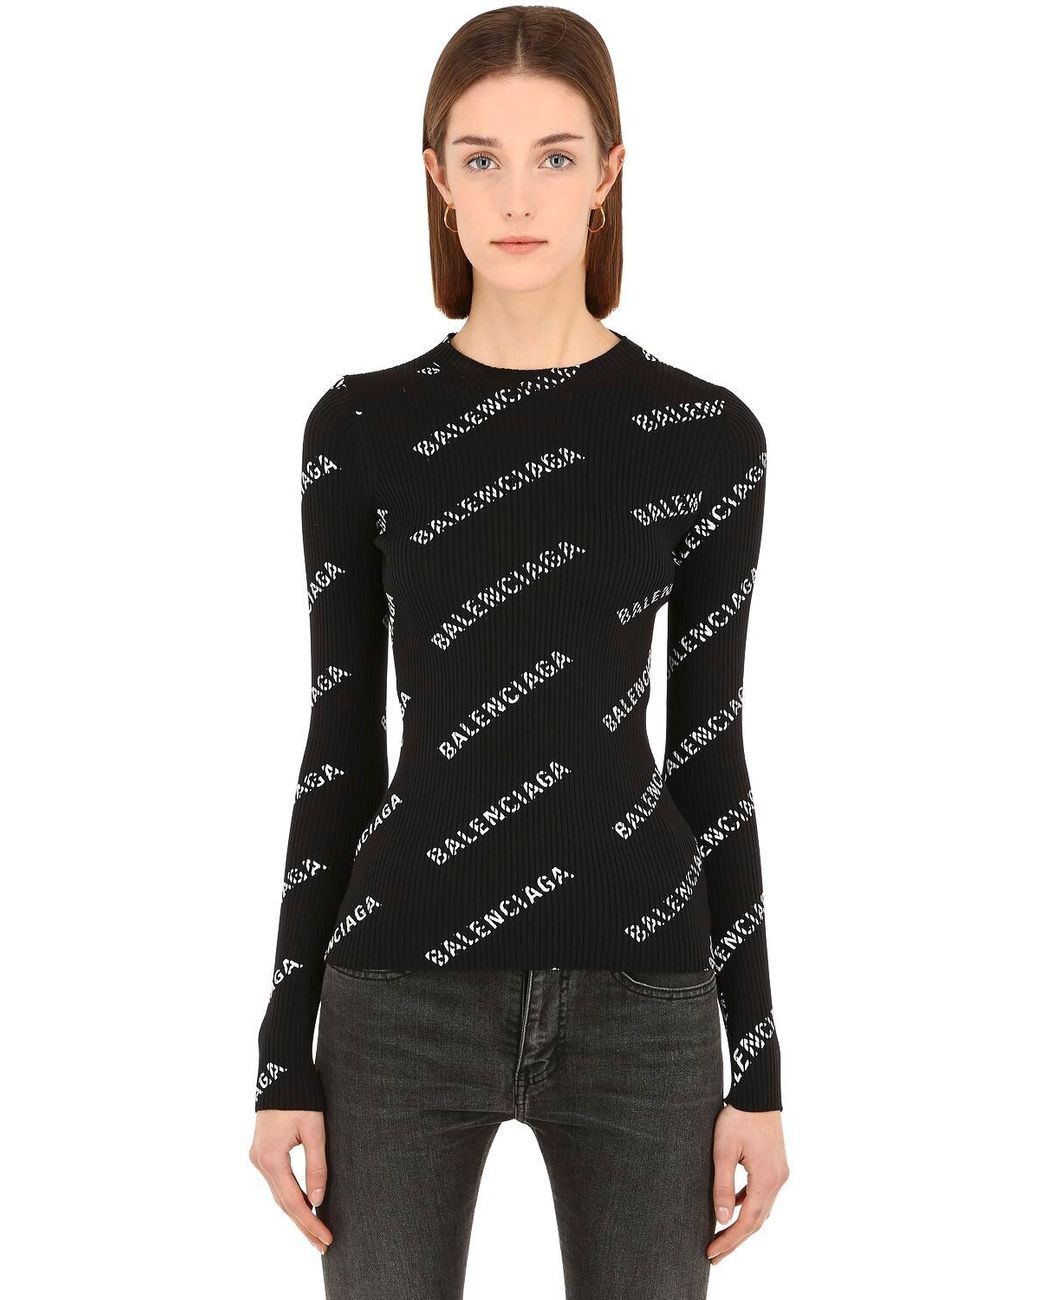 Balenciaga Logo Ribbed Sweater in Black/White (Black) - Save 44% - Lyst